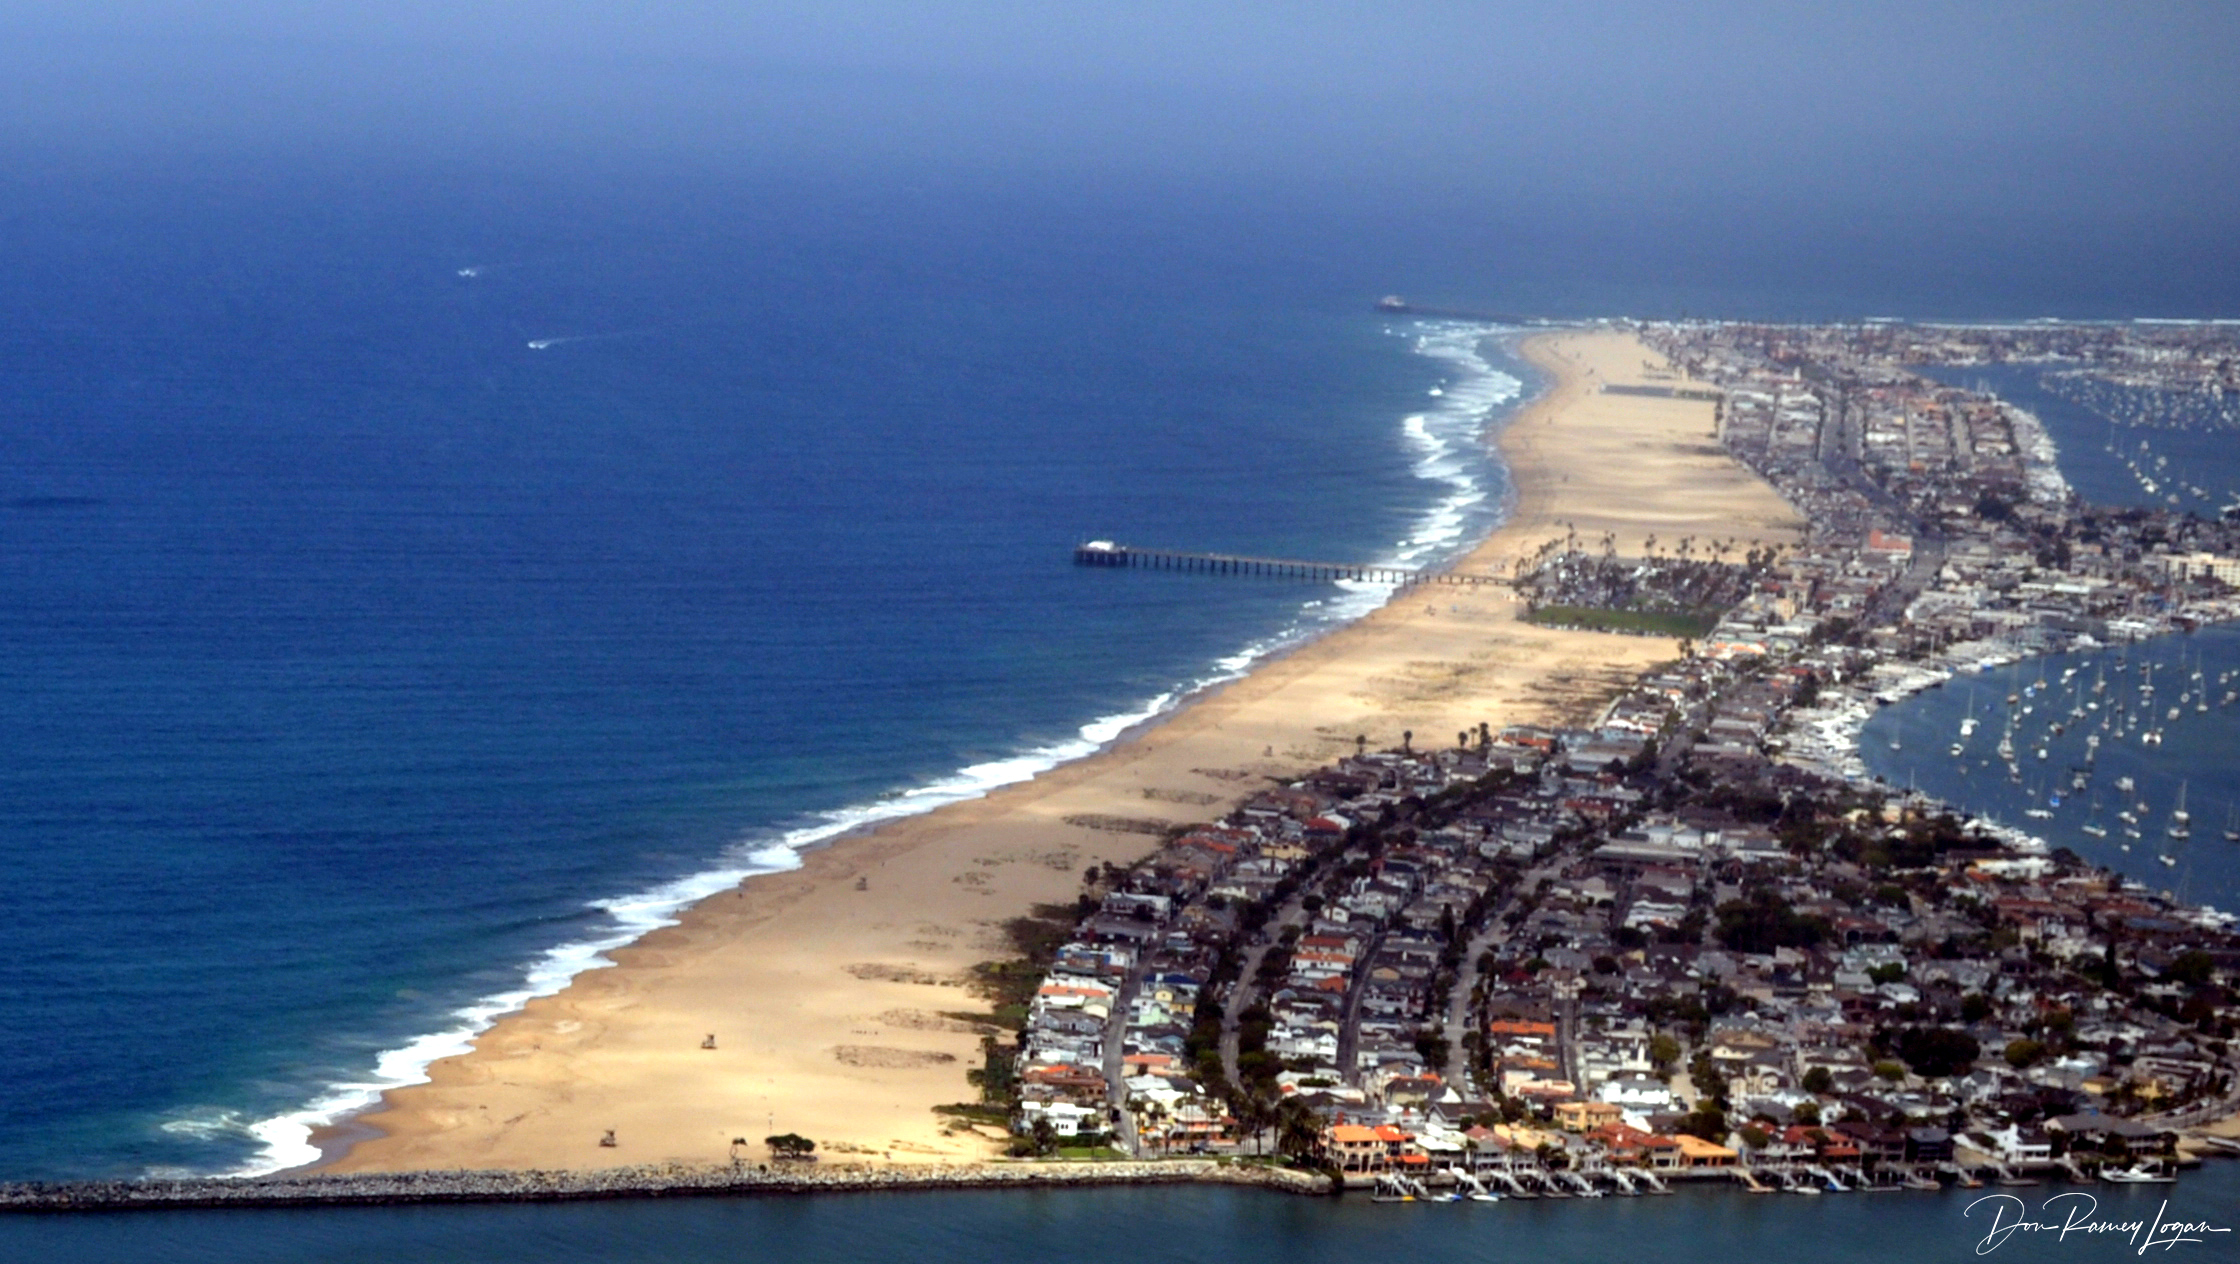 Newport Beach, California - Wikipedia